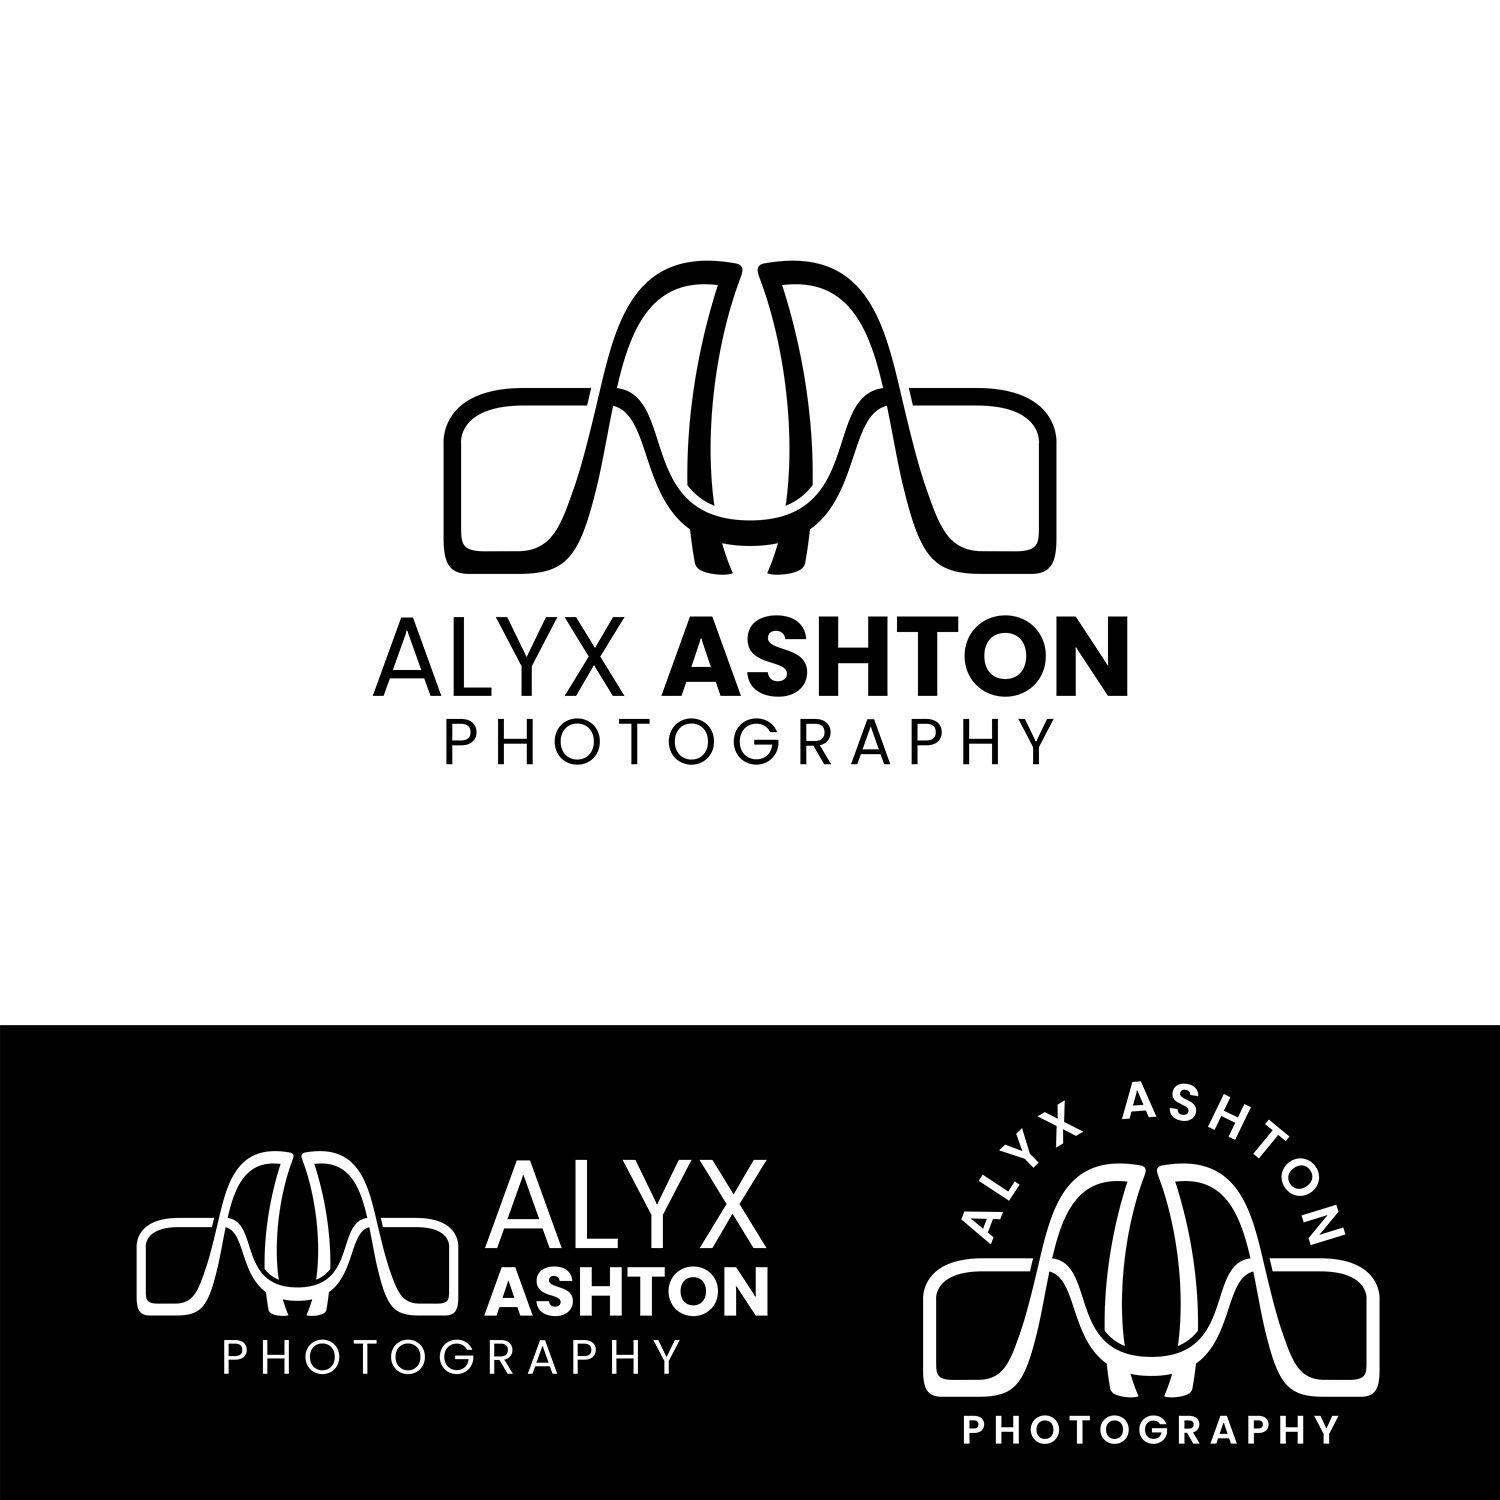 Ashton Company Logo - Upmarket, Professional, Professional Photography Logo Design for AA